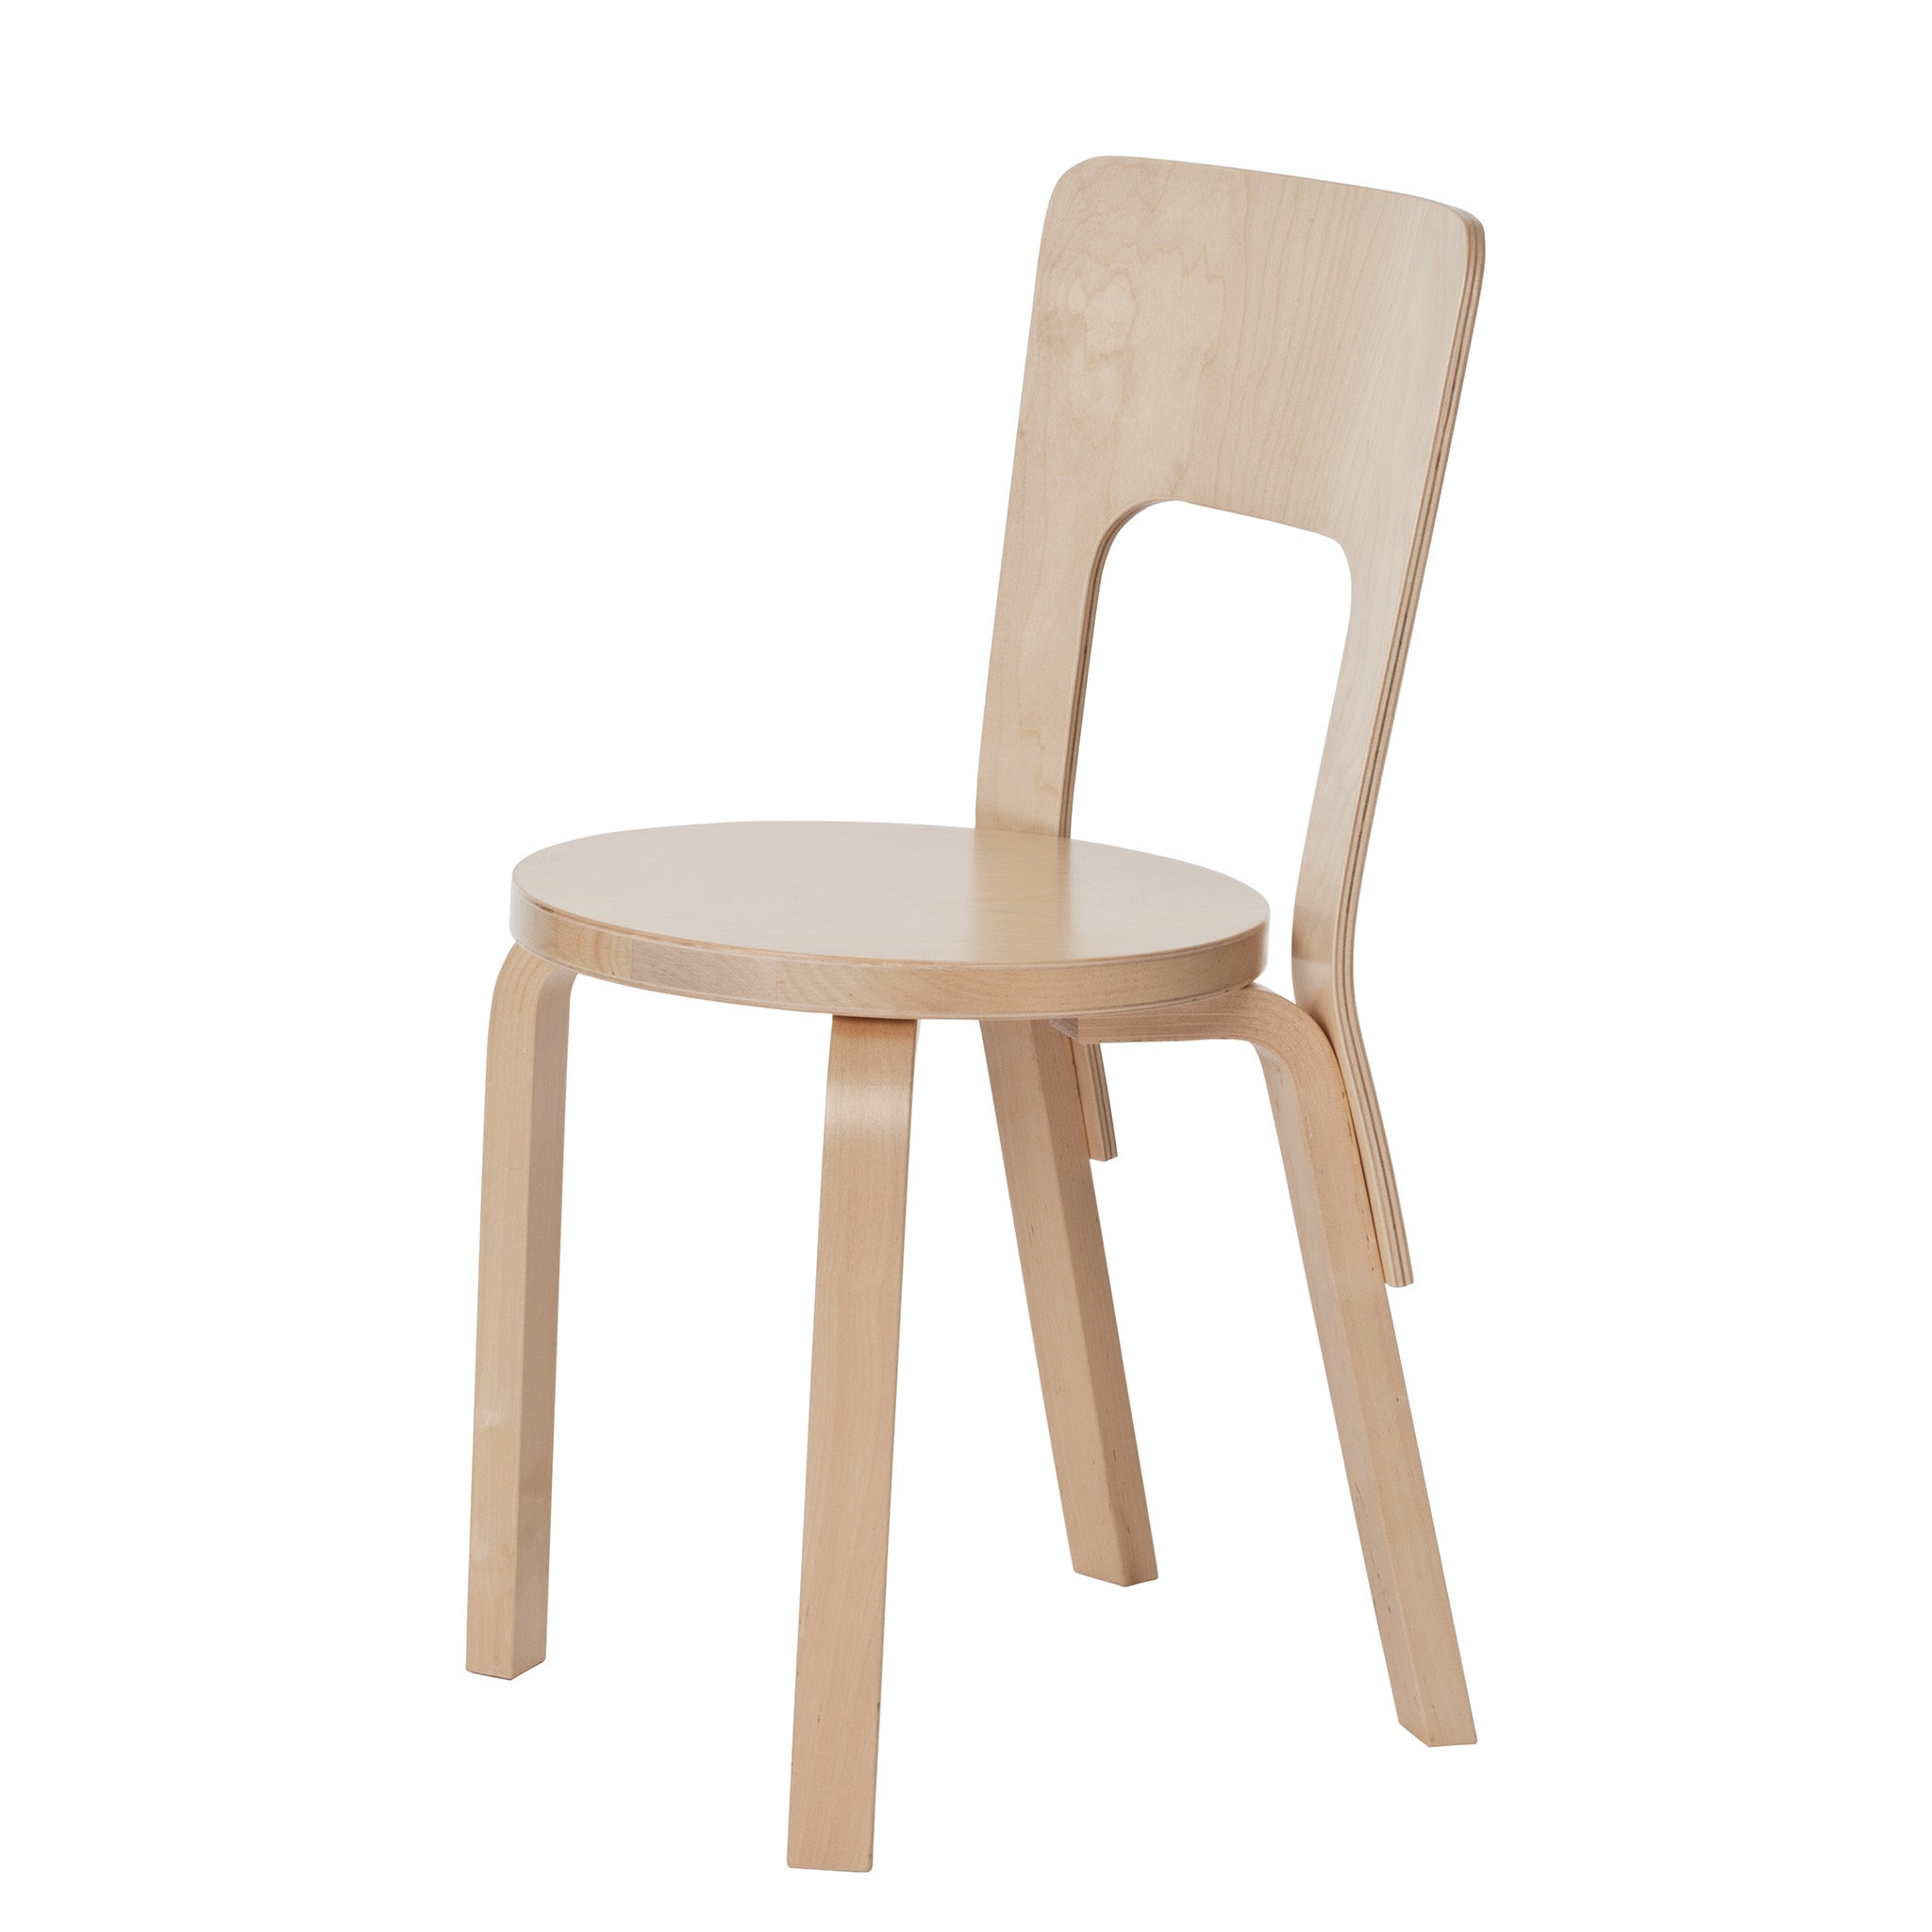 Chair 66 by Artek